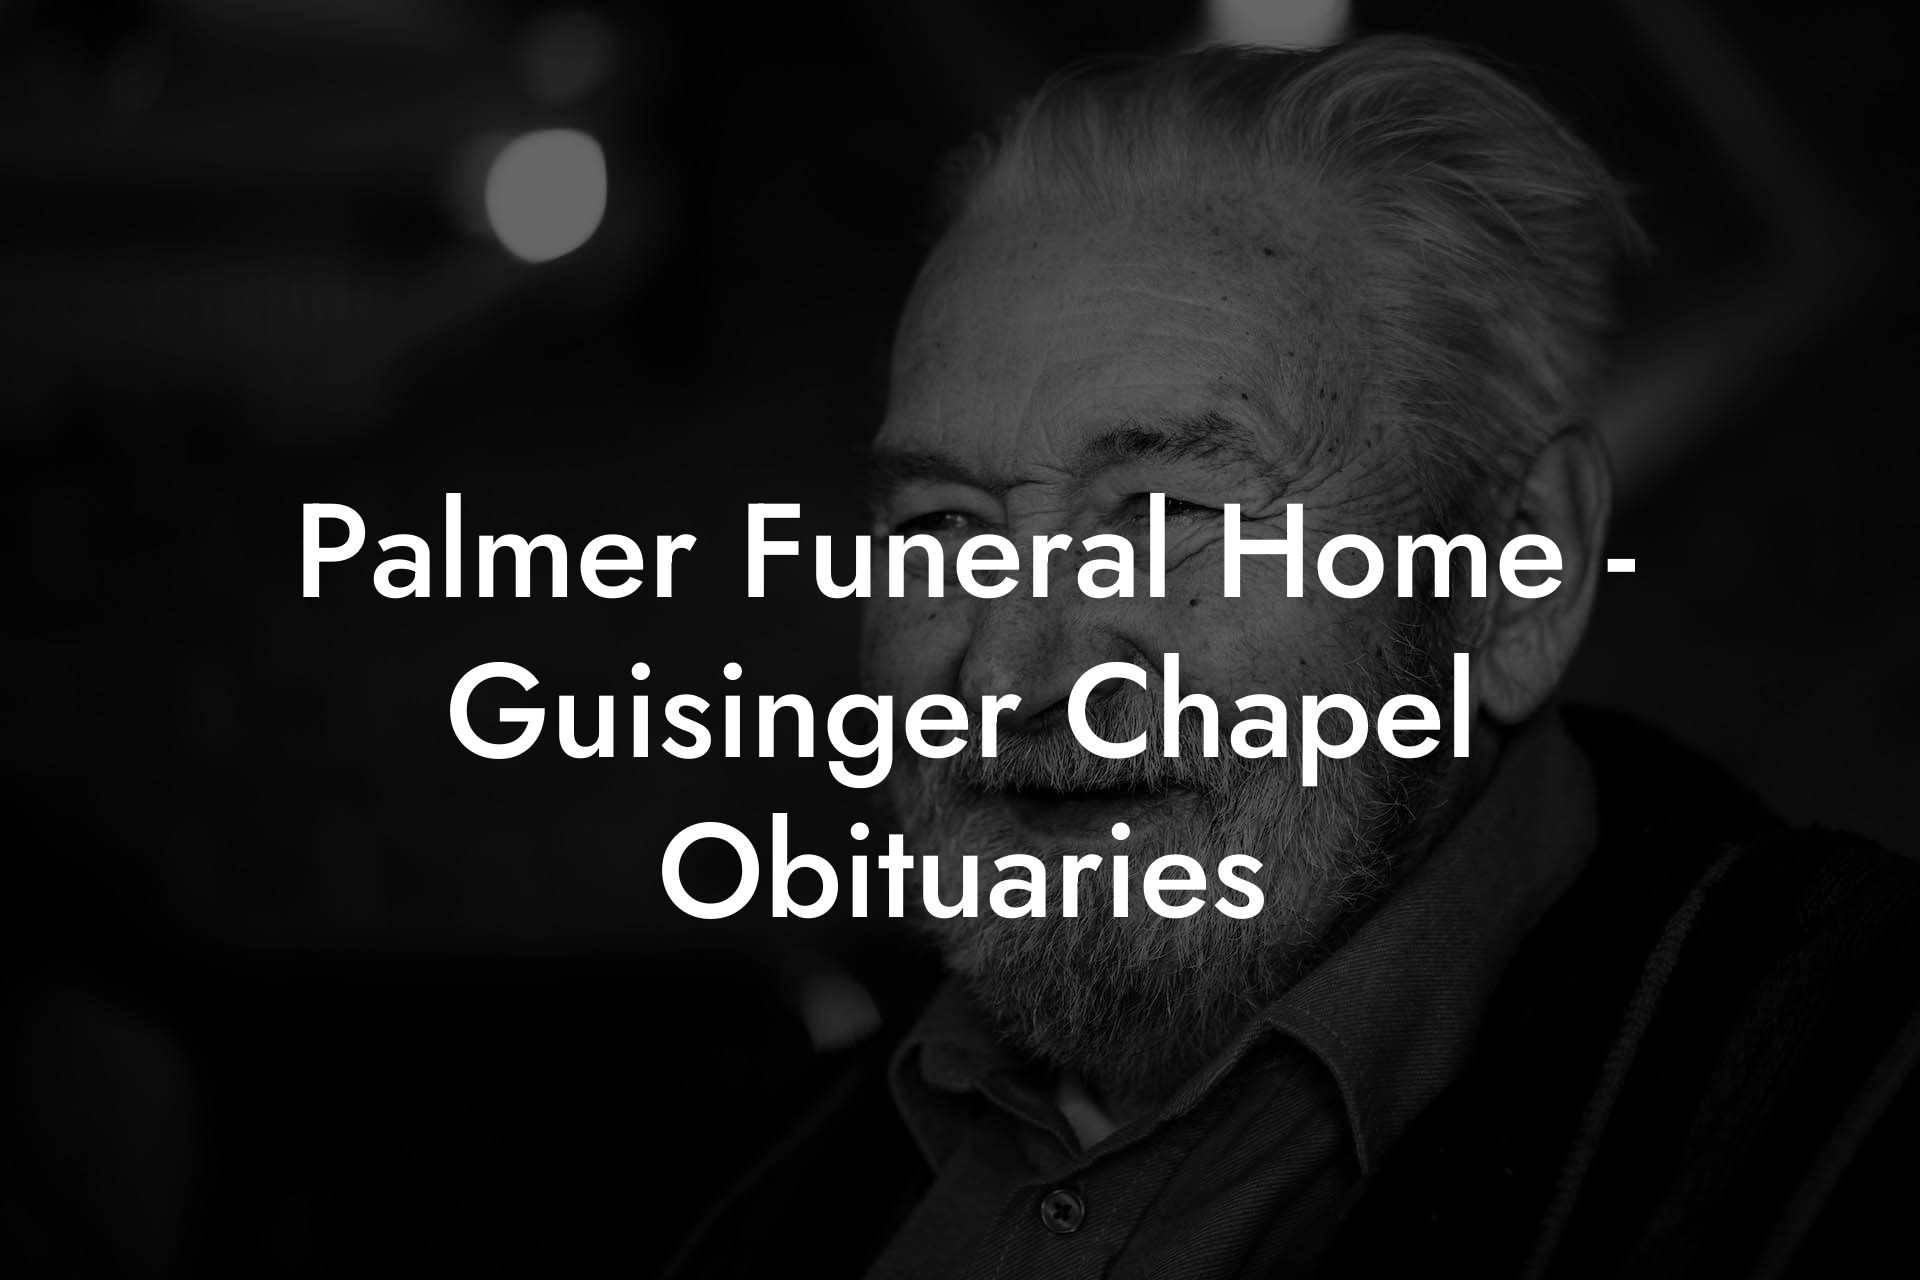 Palmer Funeral Home - Guisinger Chapel Obituaries